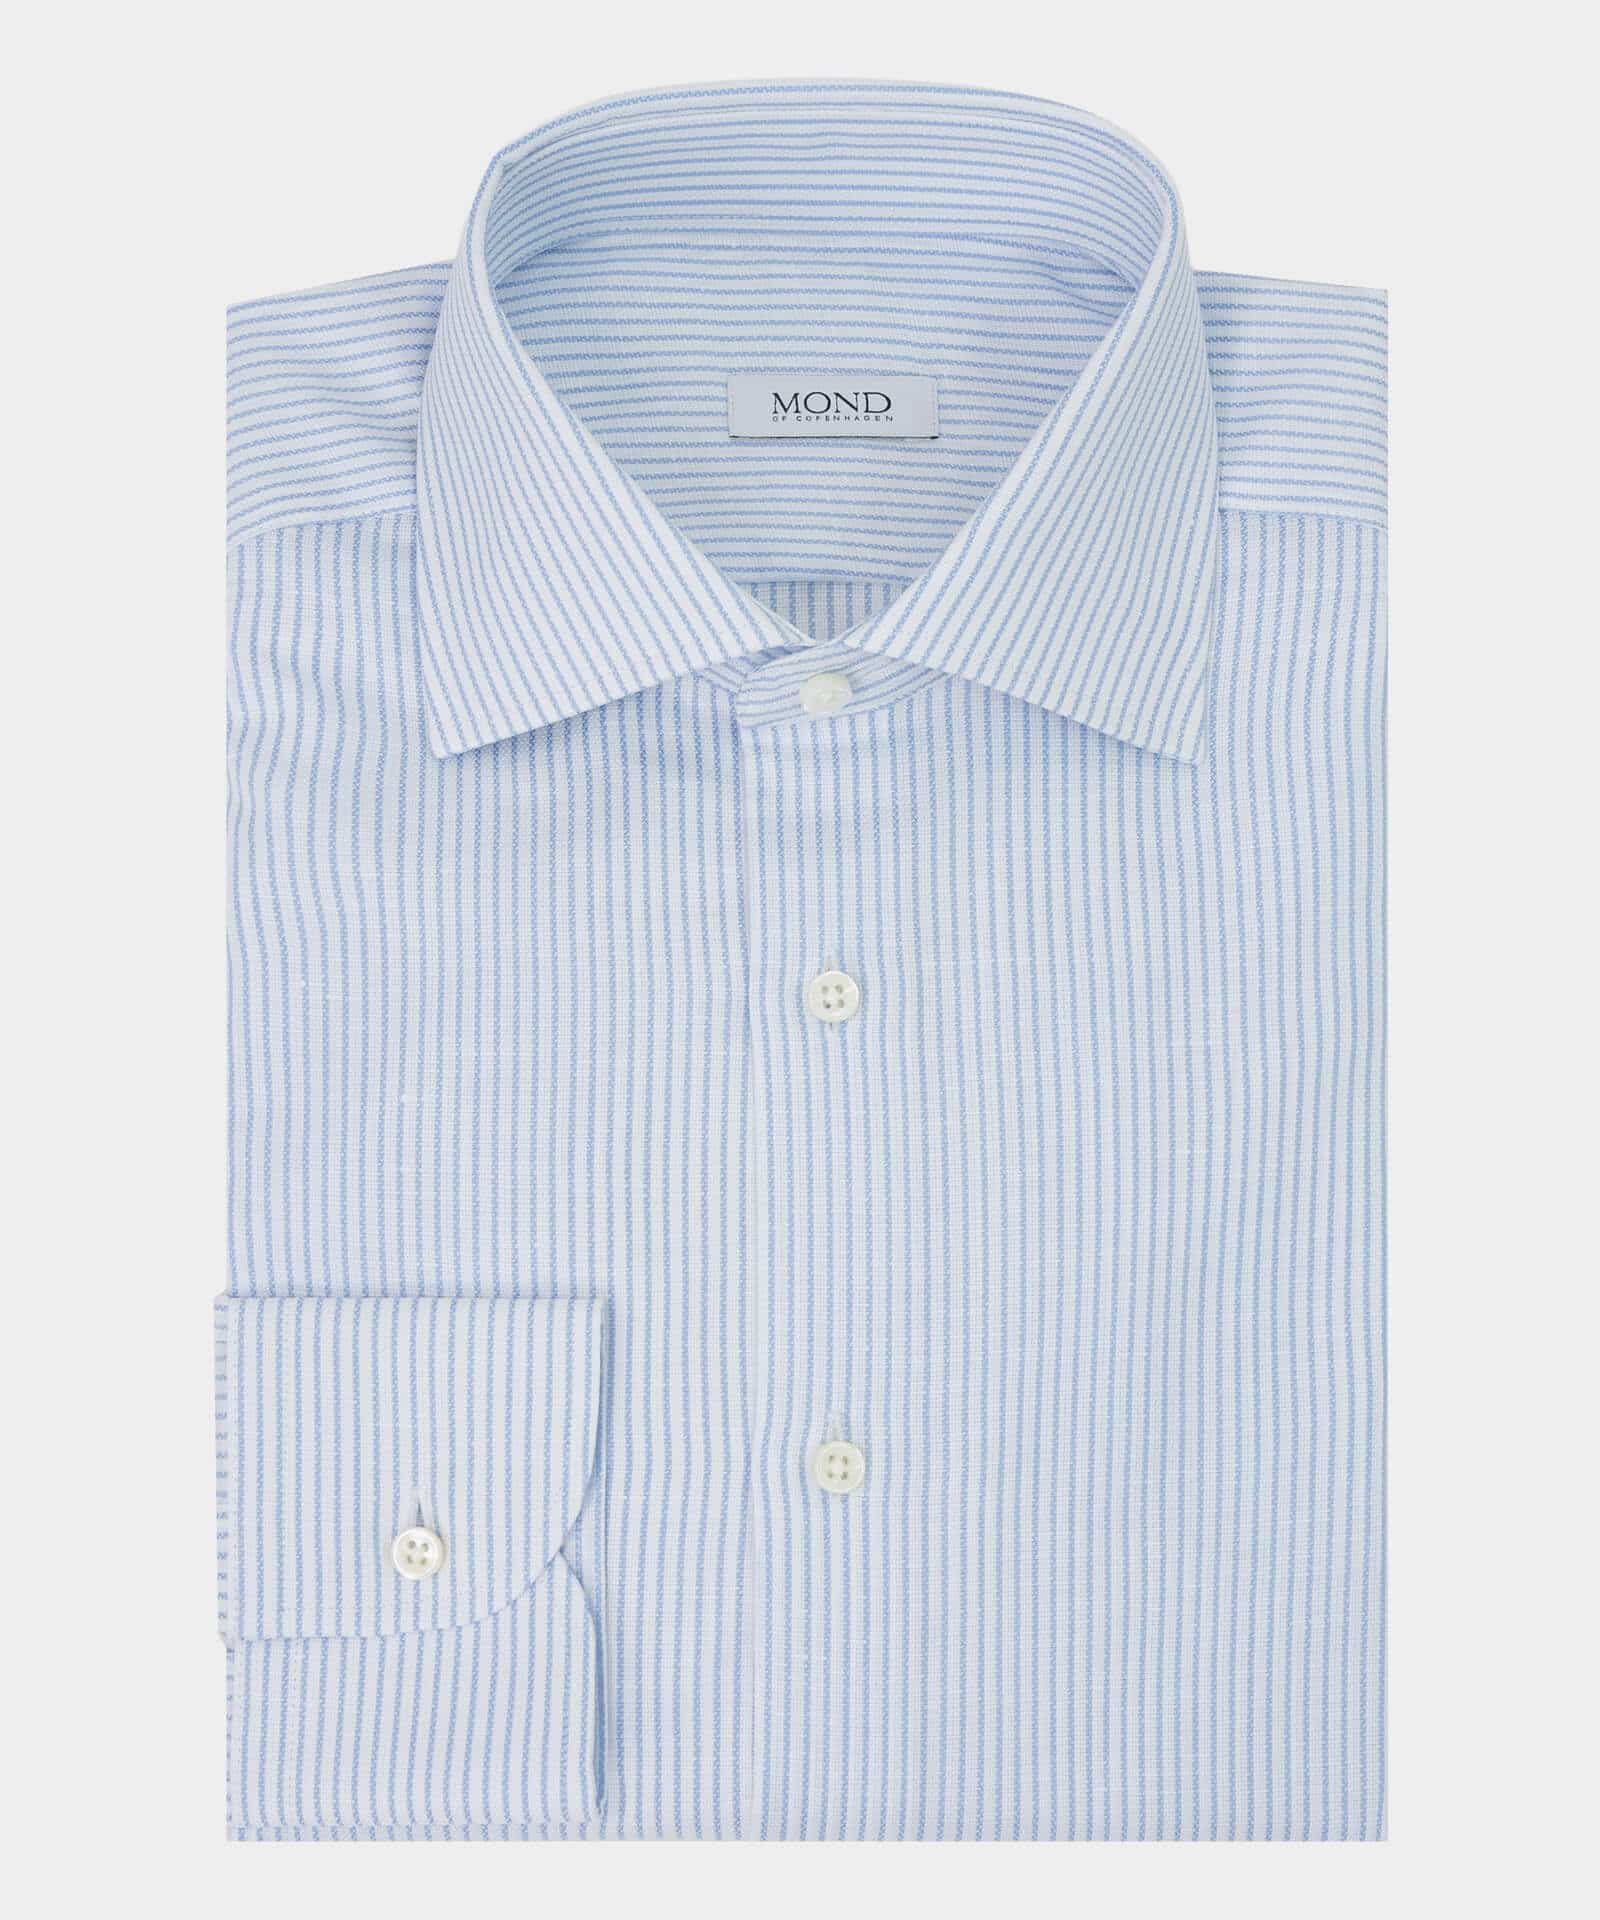 light blue striped cotton and line shirt